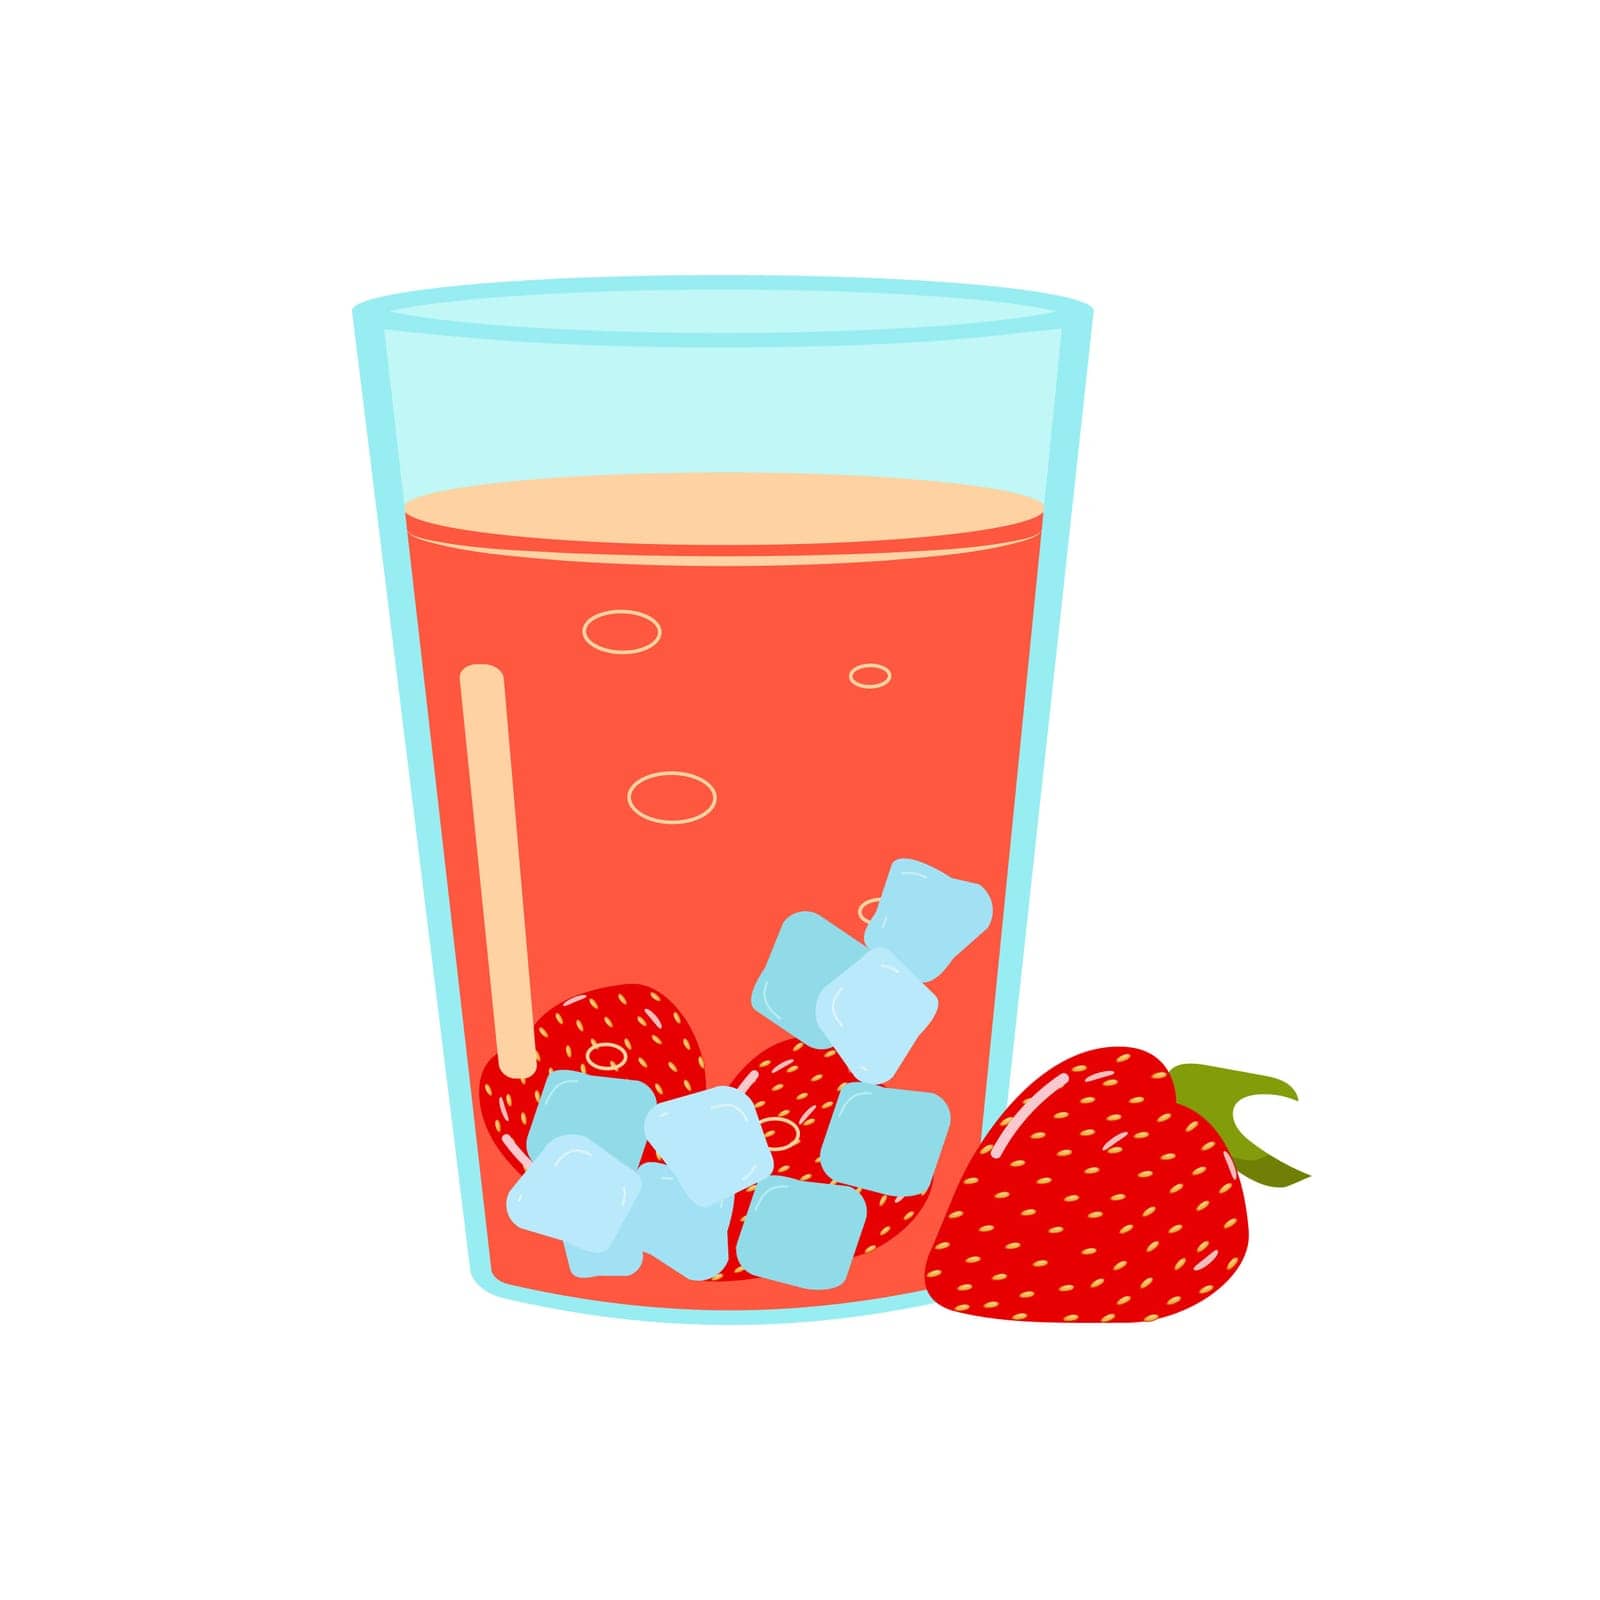 Summer soft fruit cold refreshment drinks glass. by Veranikas